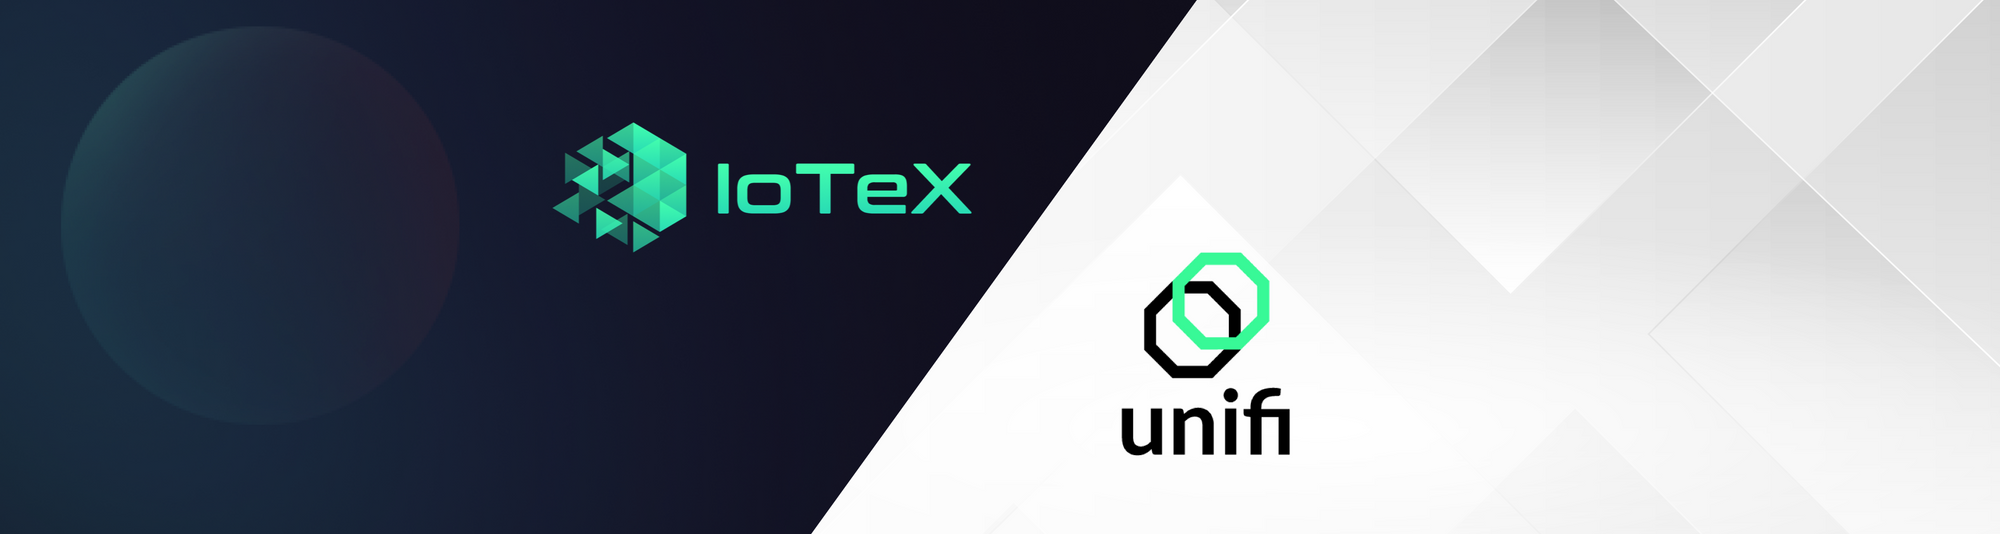 iotex-x-unifi-protocol-utrade-v2-launch